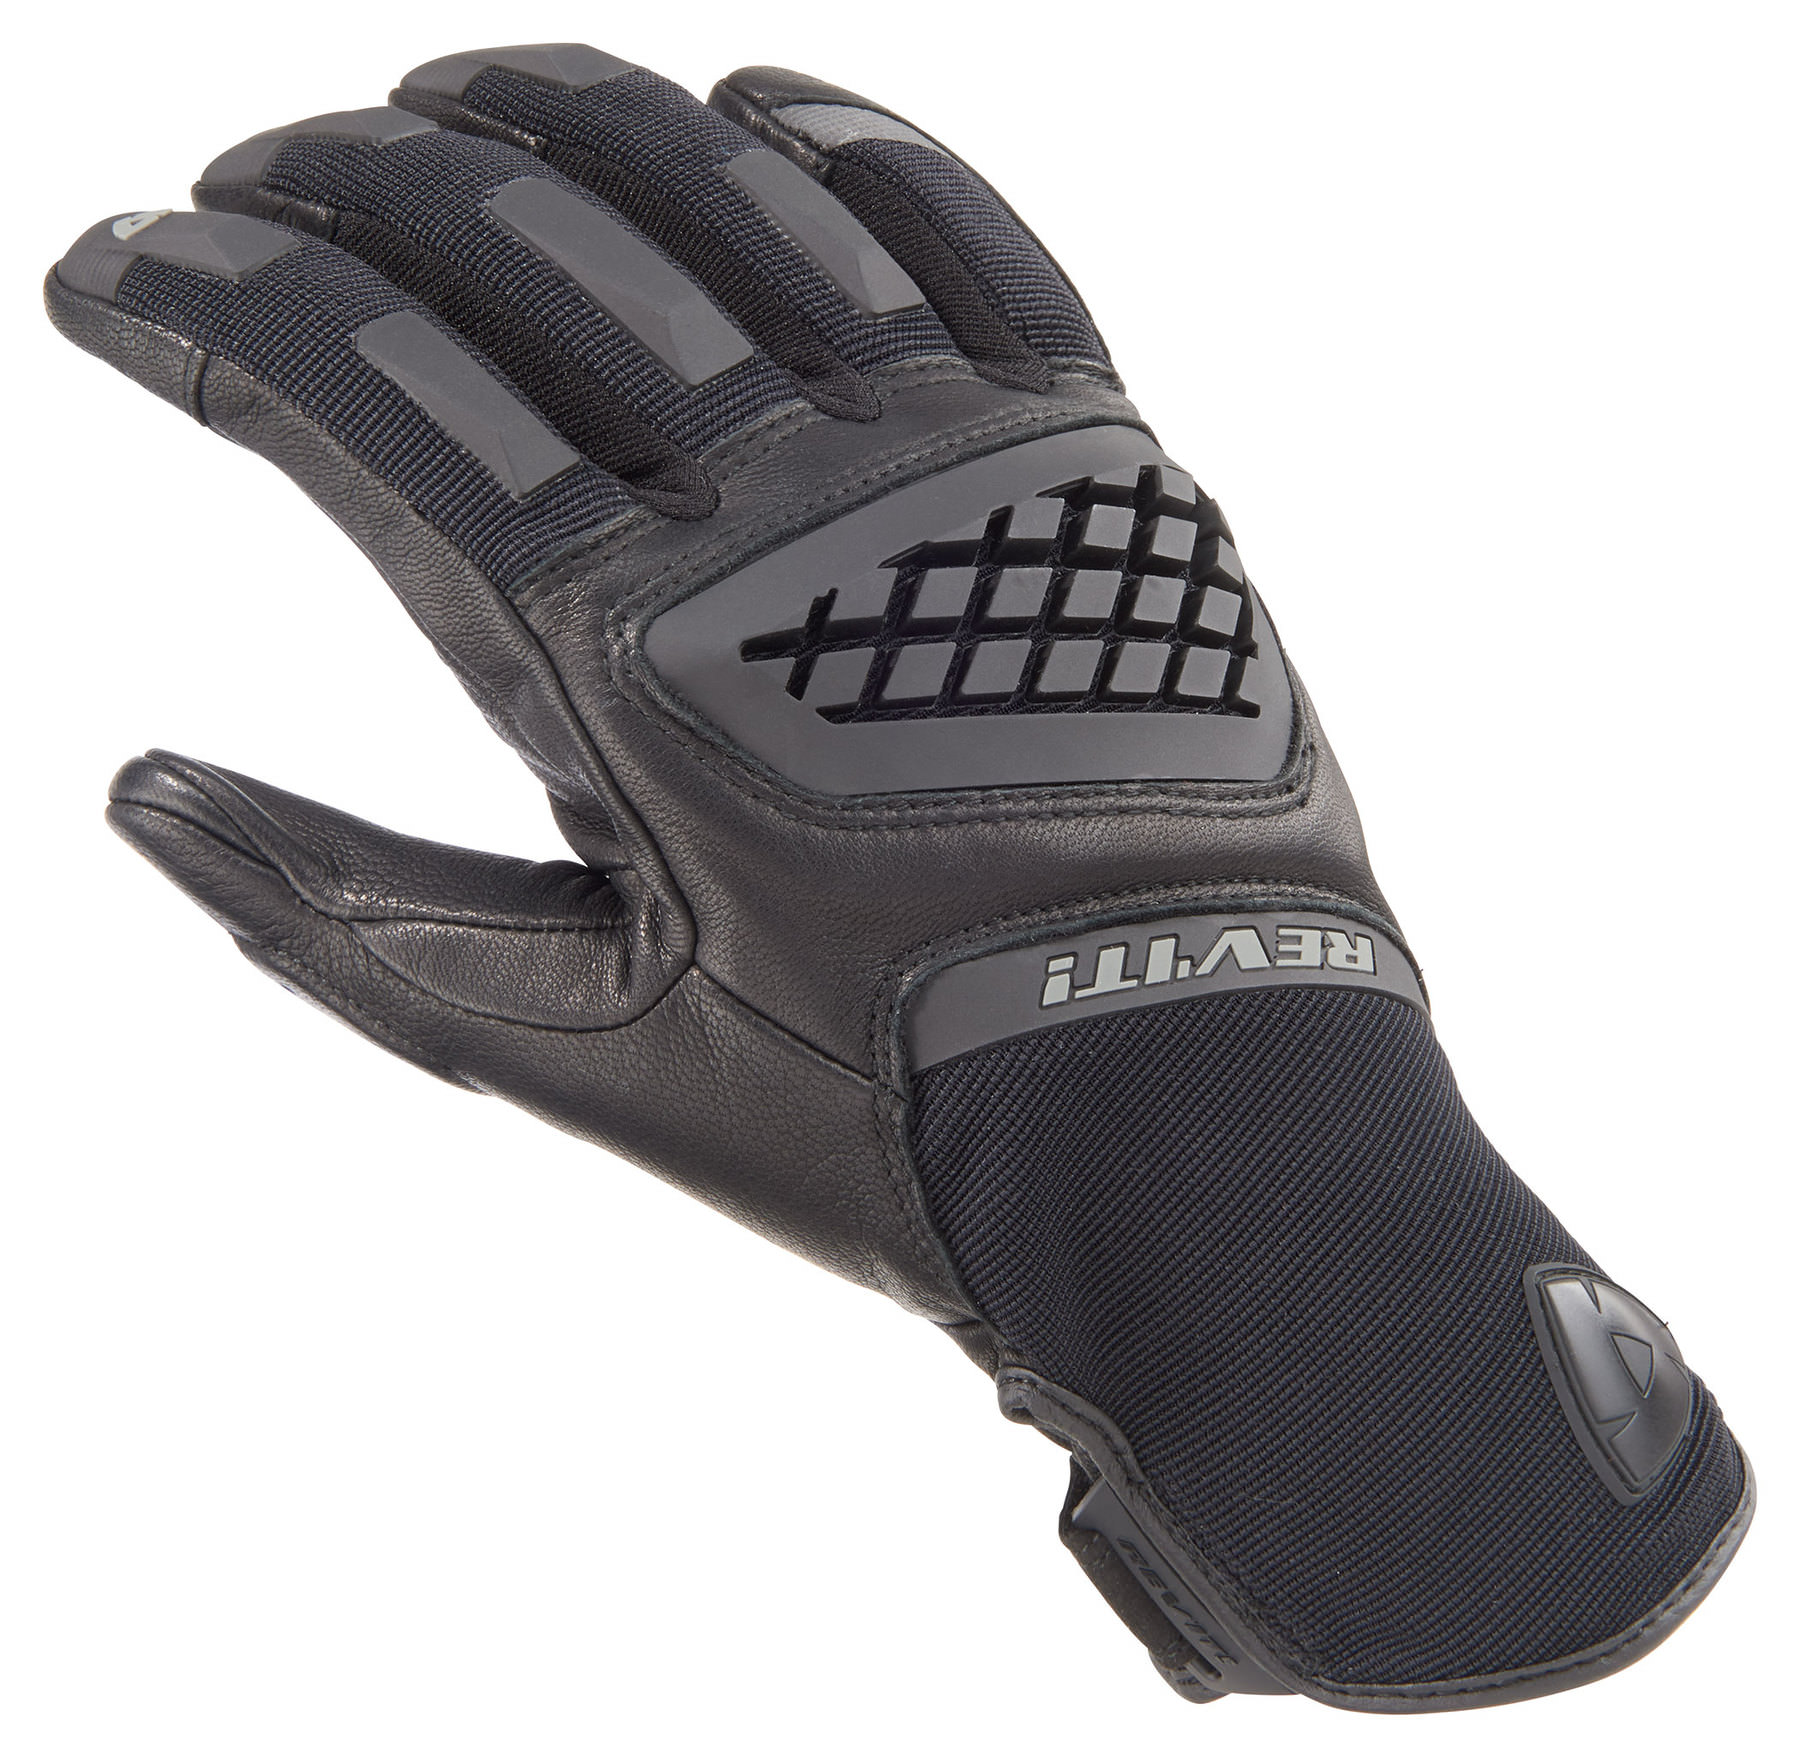 Rev It Neutron 3 Leather Motorcycle Gloves S Black White FGS145-1600-S